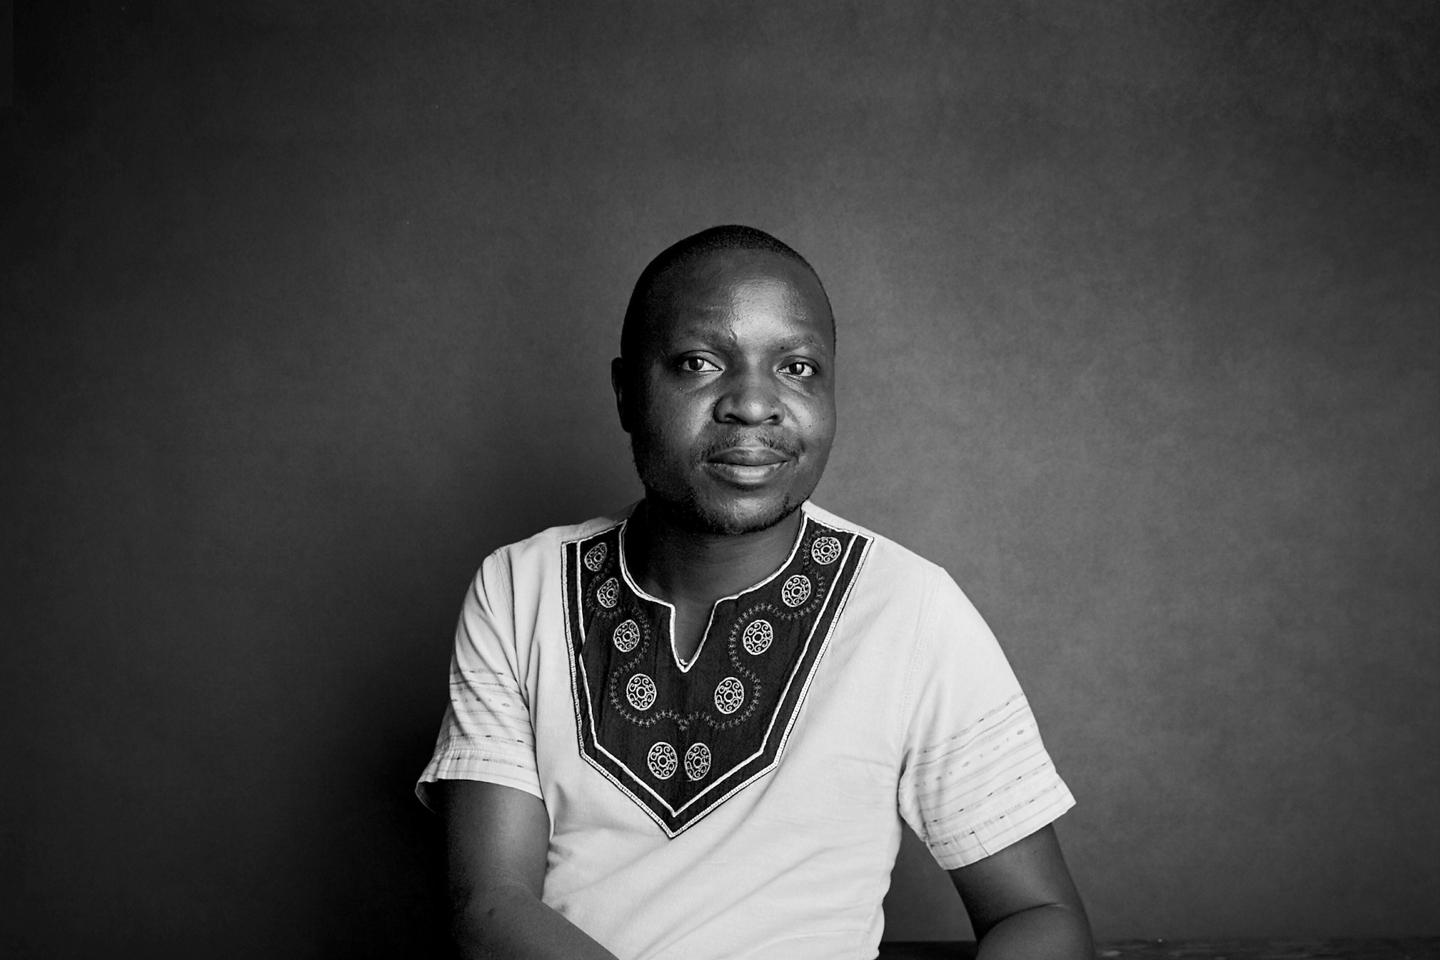 Black and white portrait of William Kamkwamba